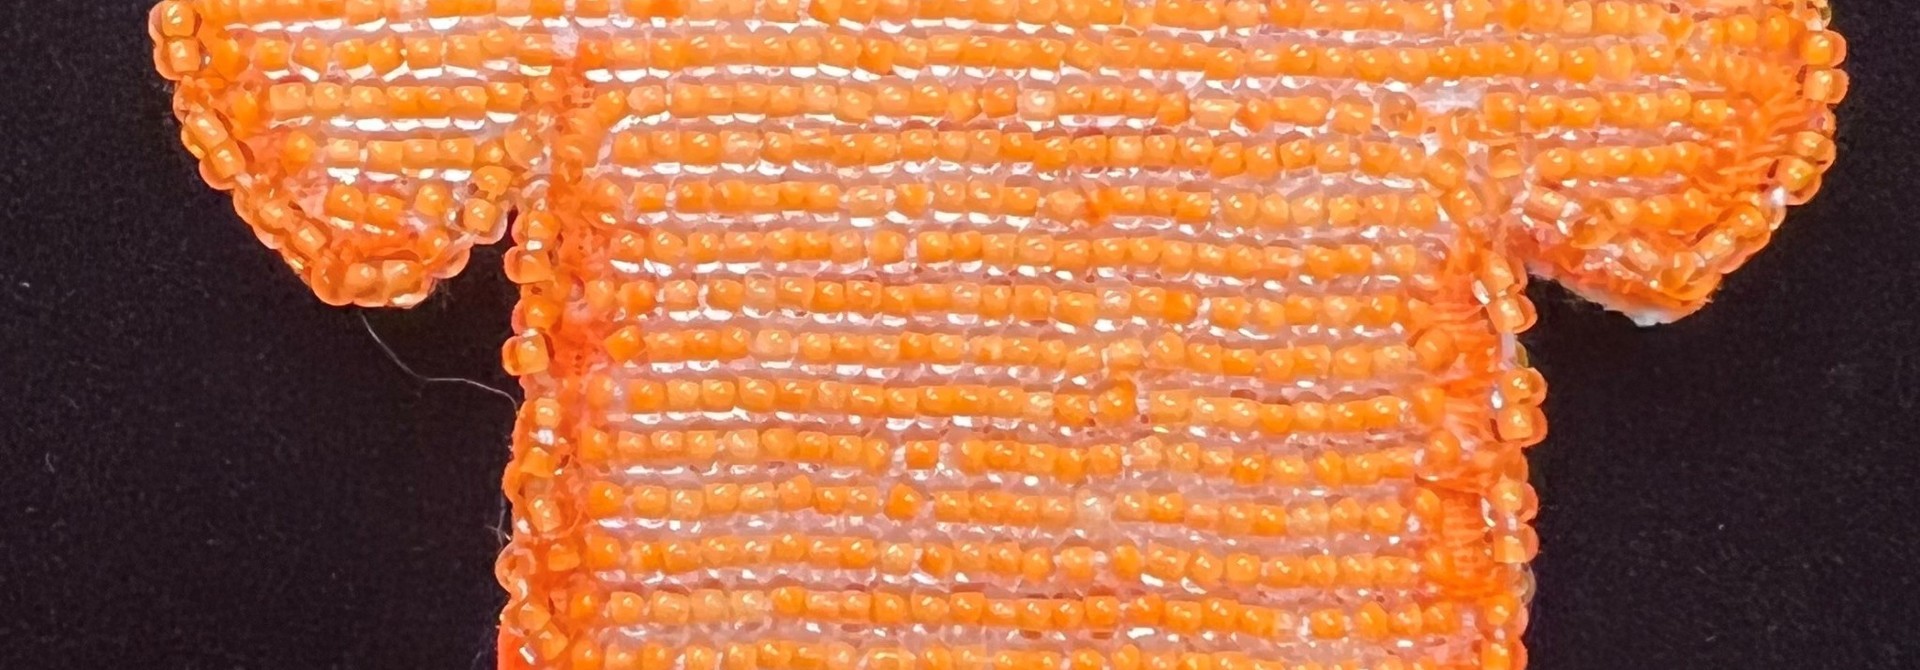 Beaded Orange Shirt Pins by Naomi John